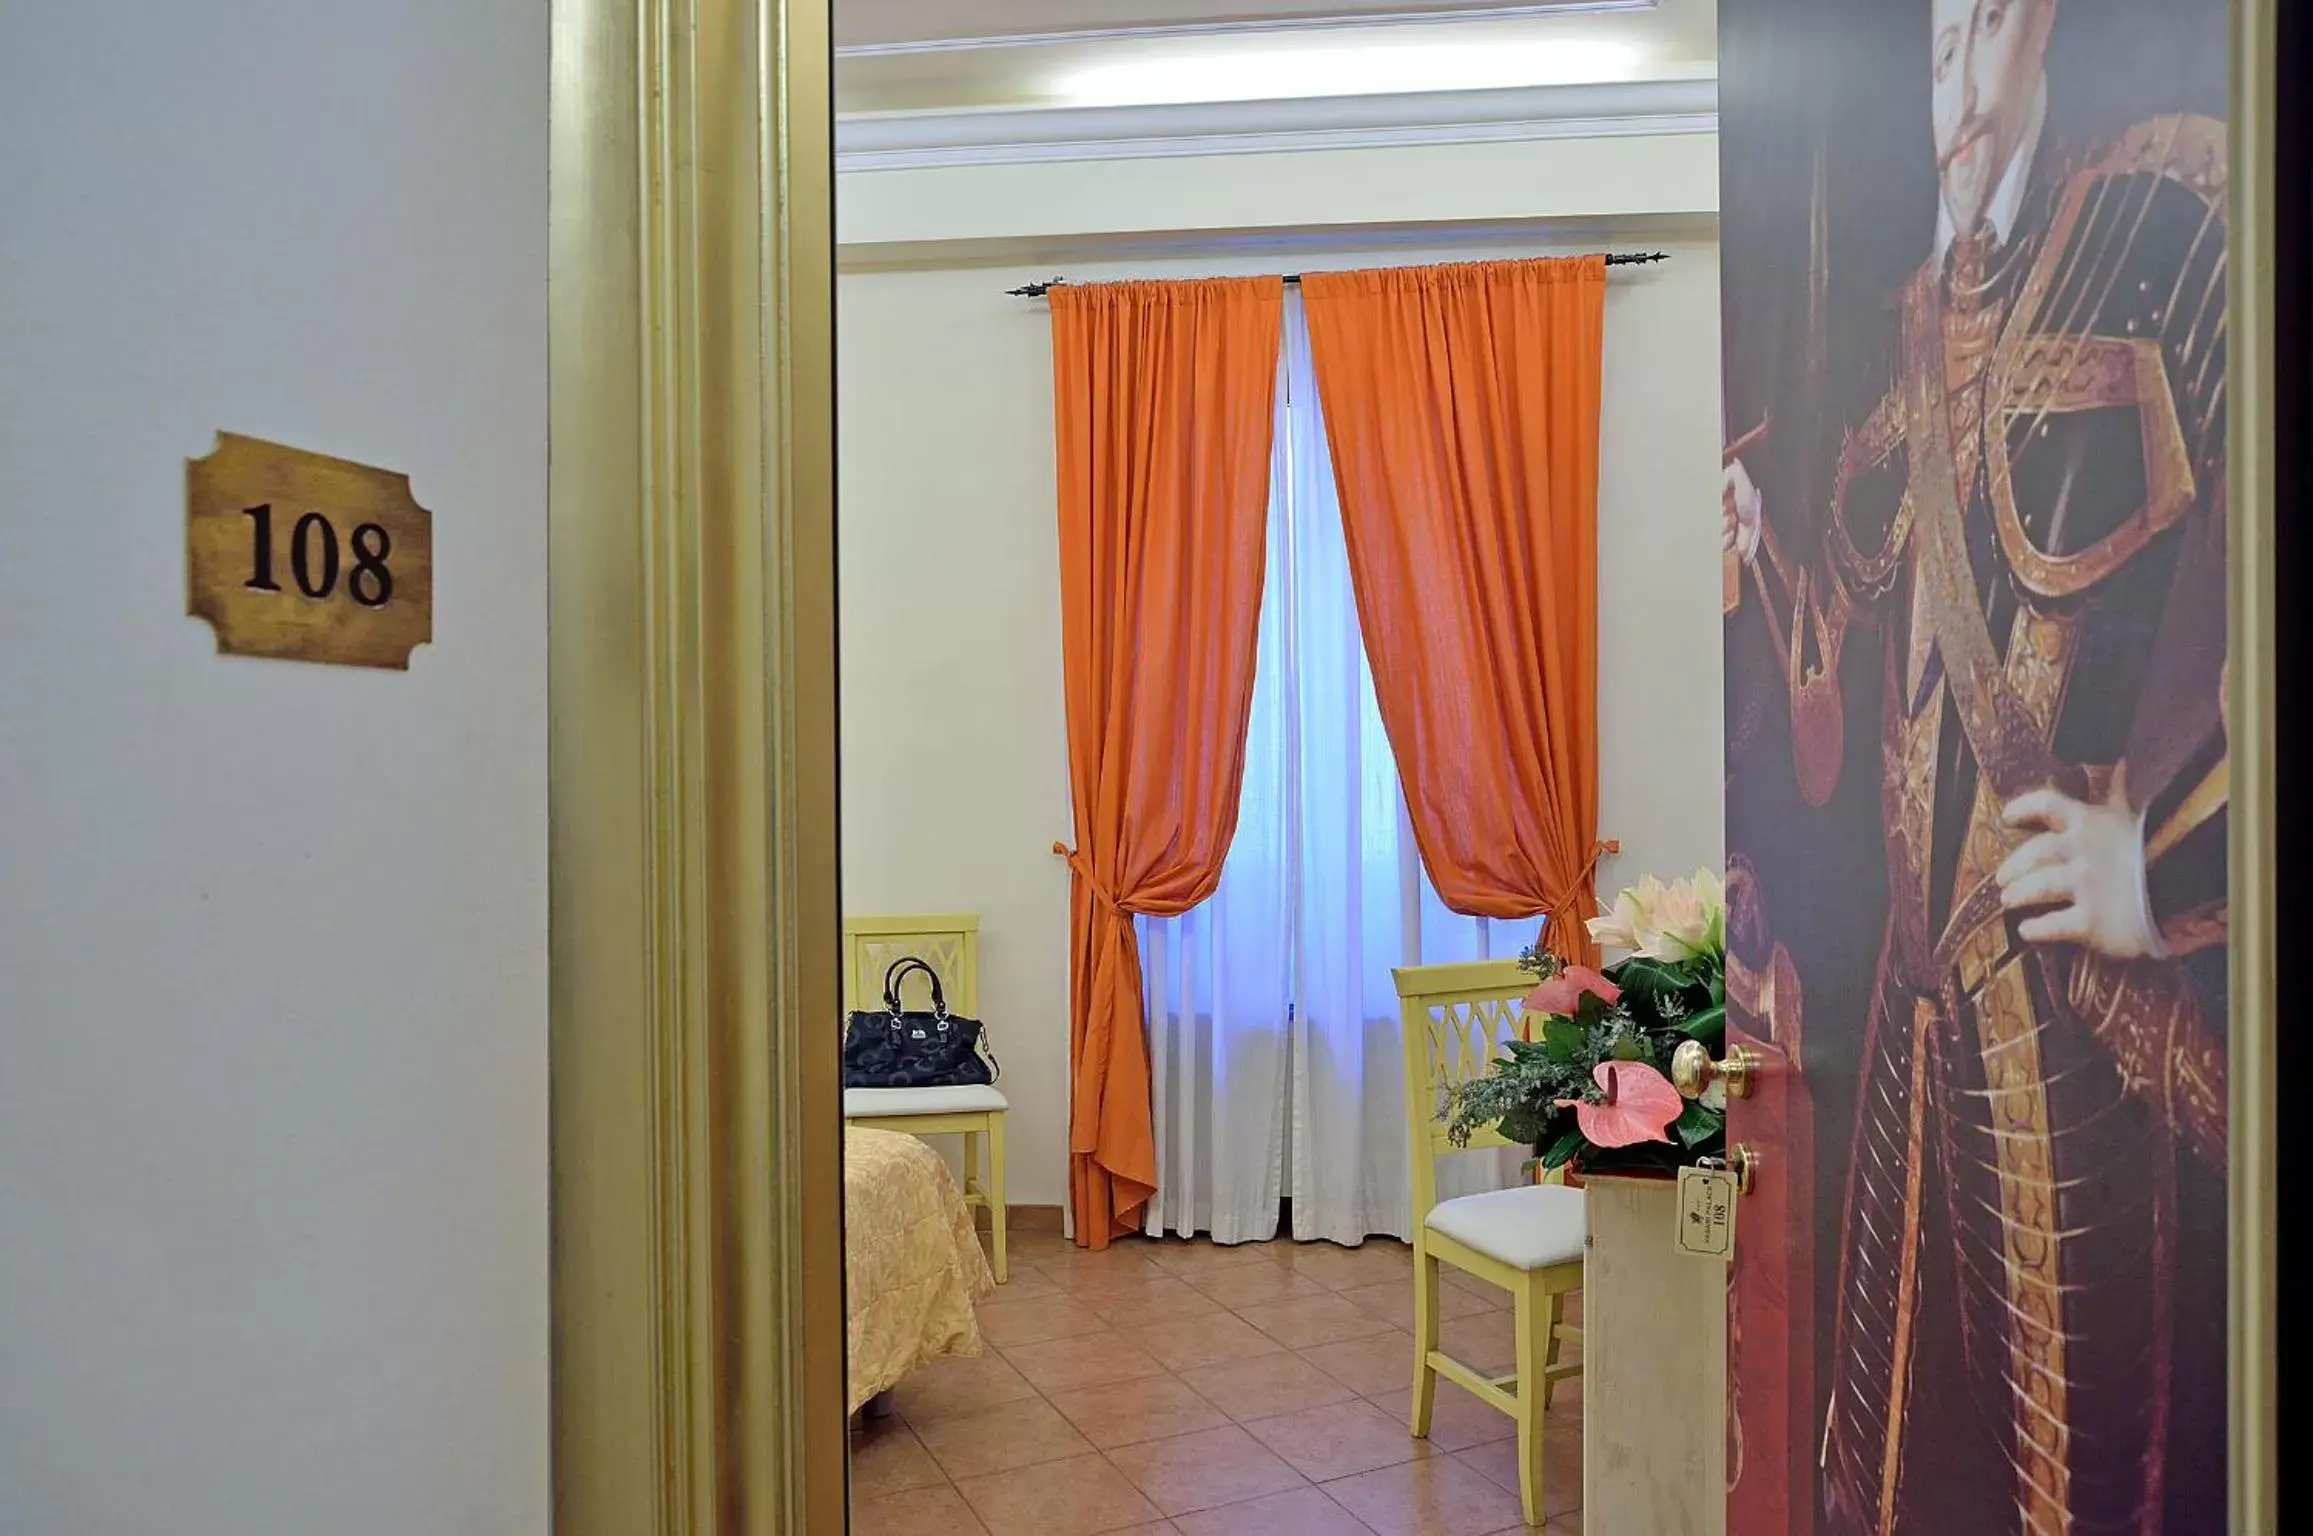 Decorative detail in Hotel Vasari